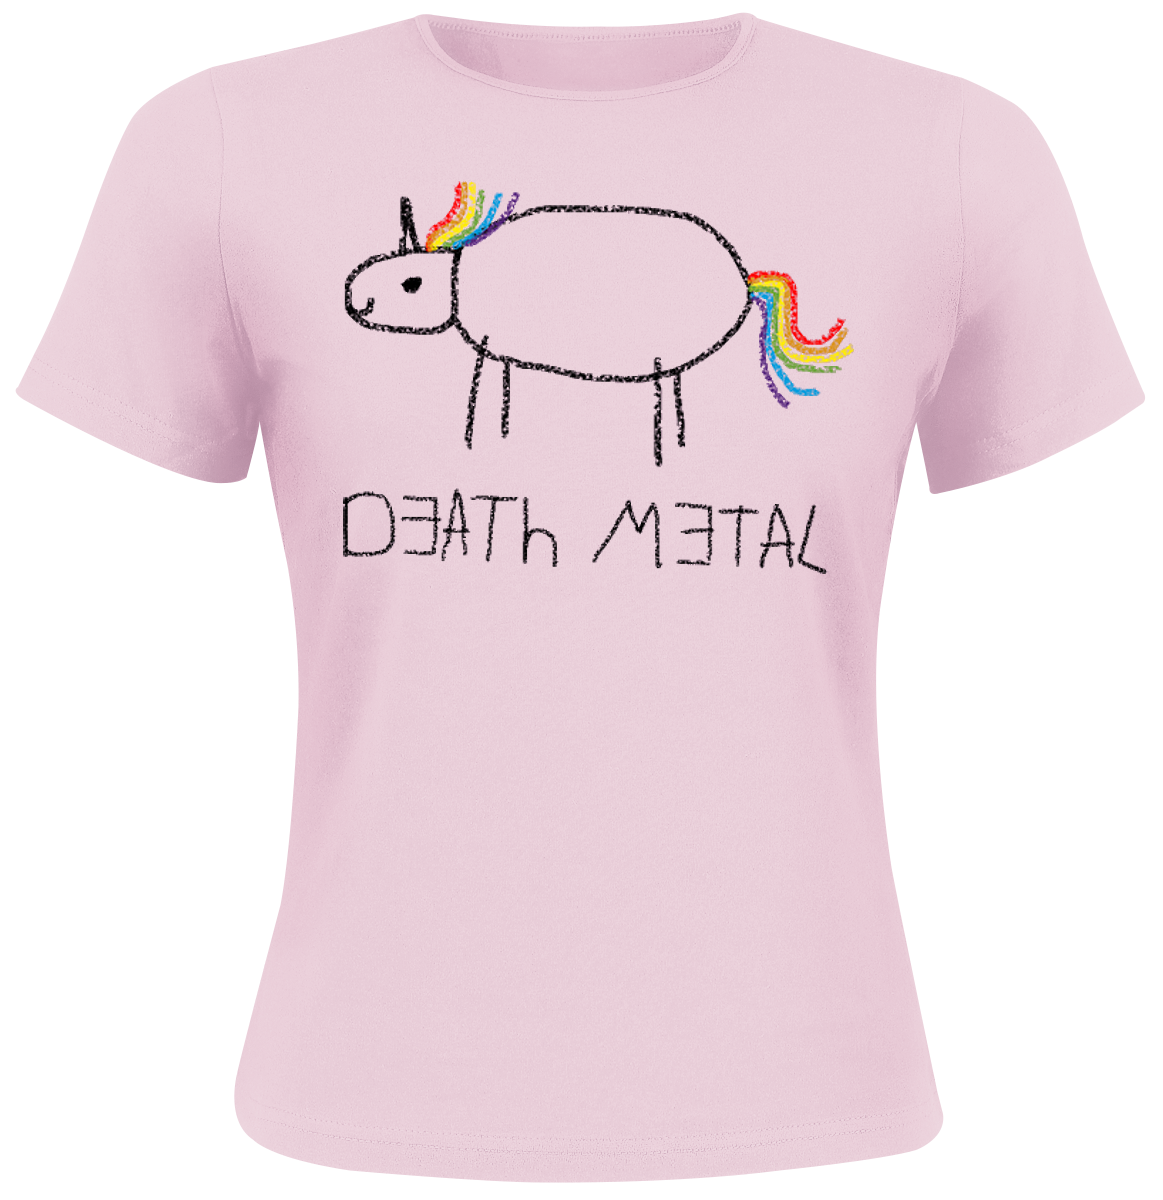 Death Metal -  - Girls shirt - light pink image